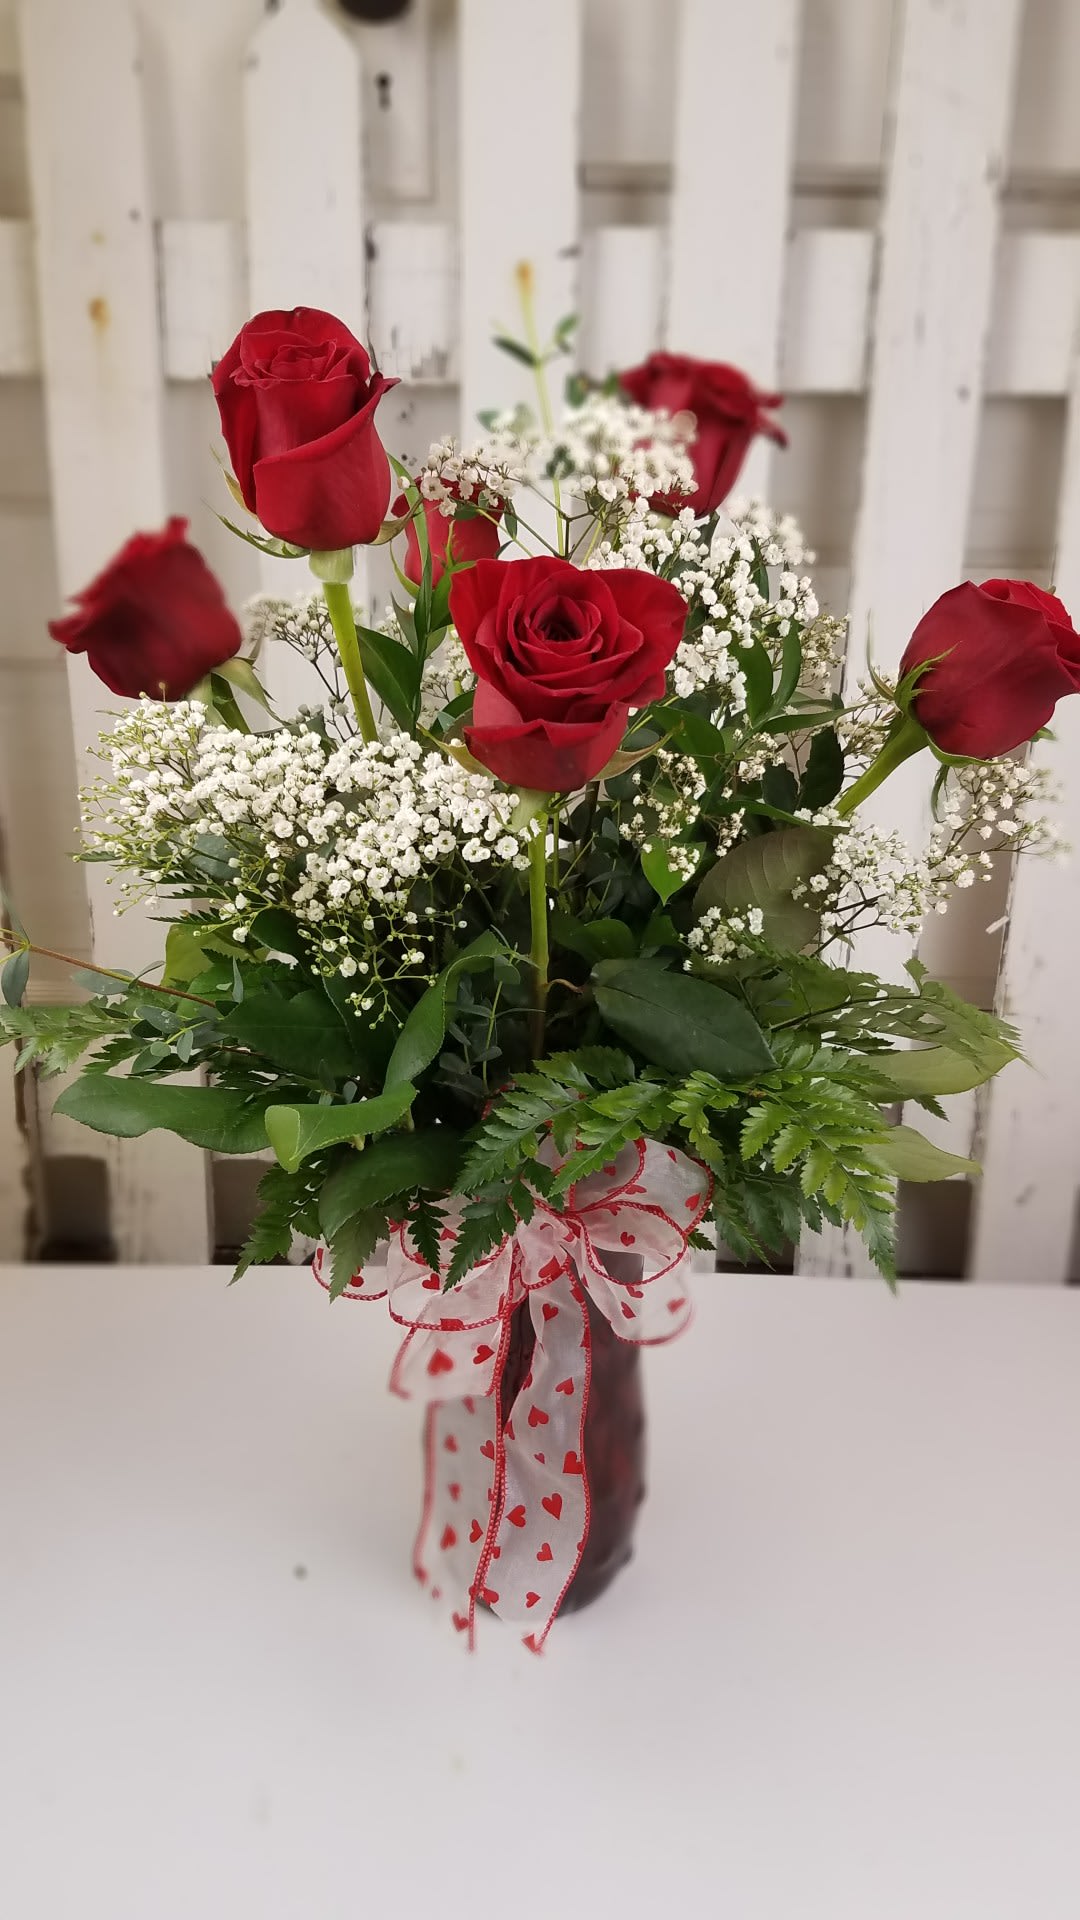 Half Dozen Roses - 6 red roses in a vase with Valentine's ribbon.